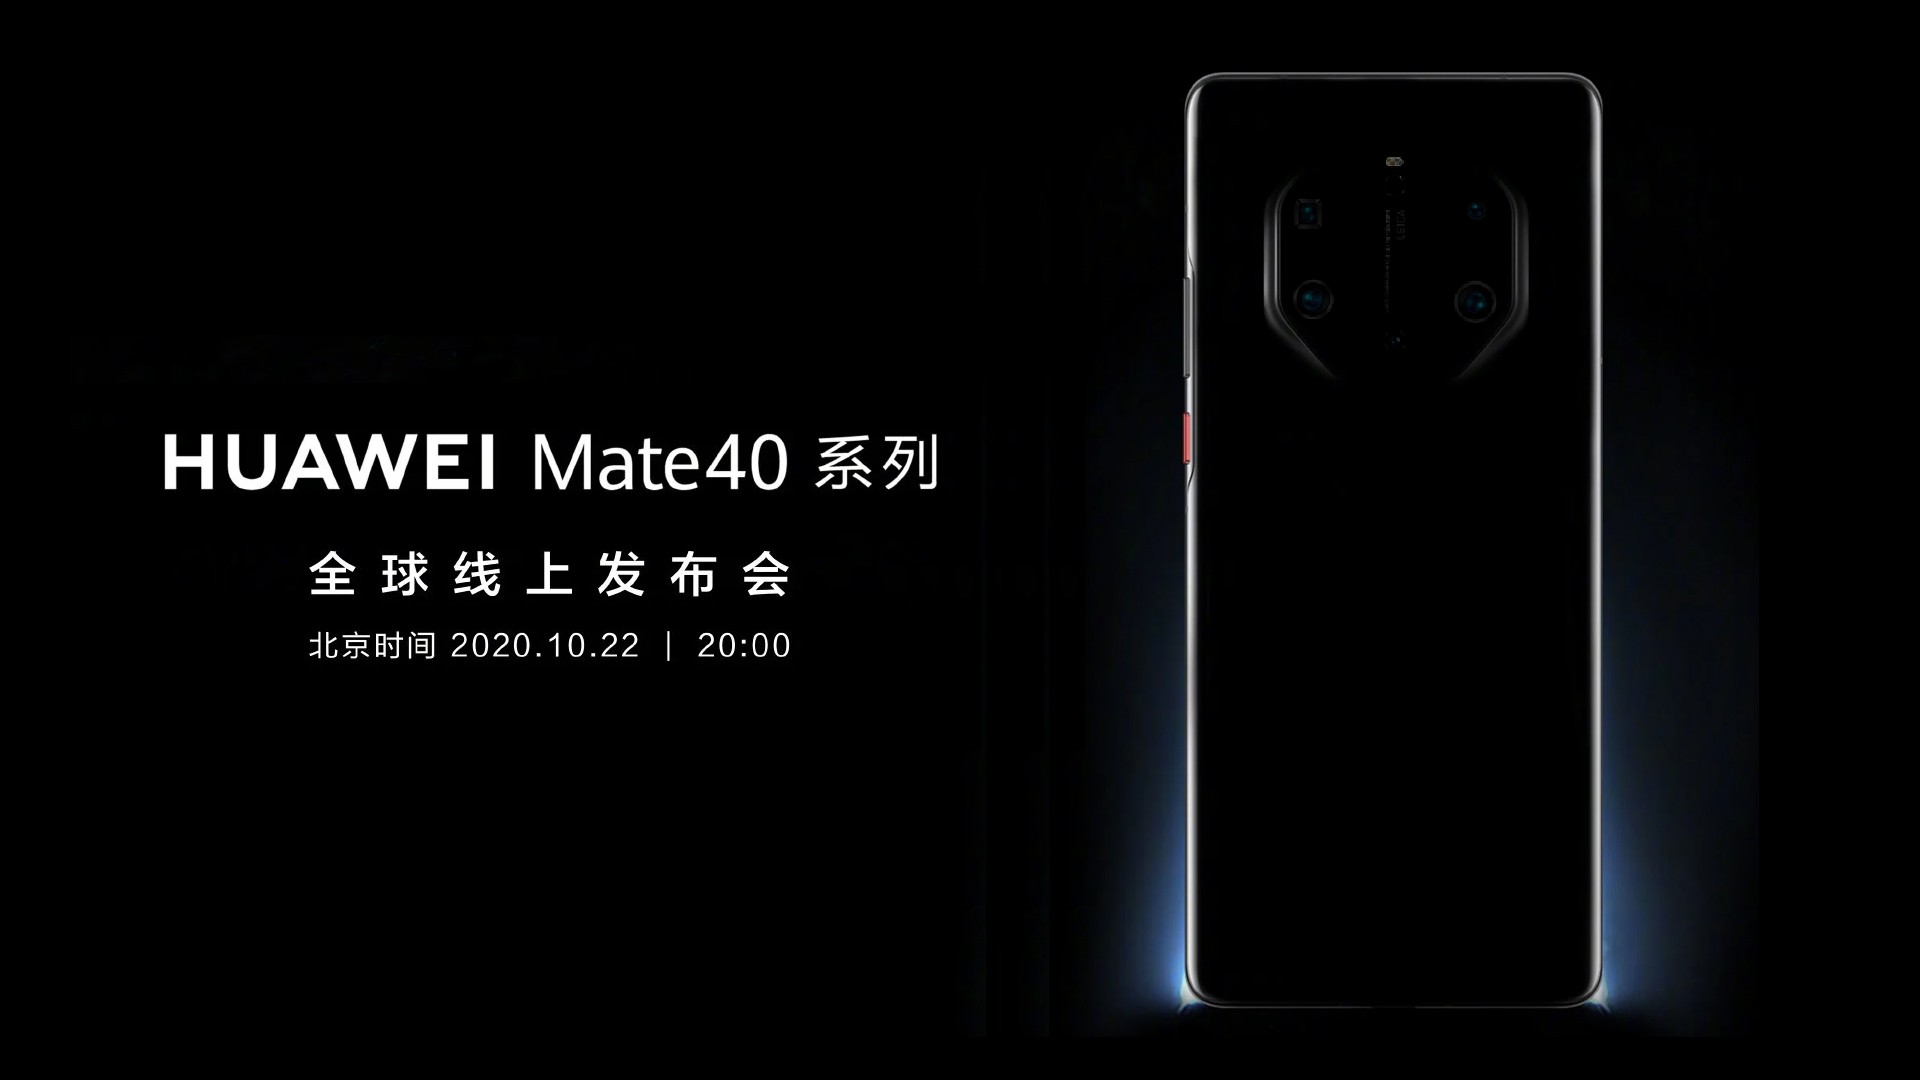 Huawei MATE 40 Pro oficiala imagine